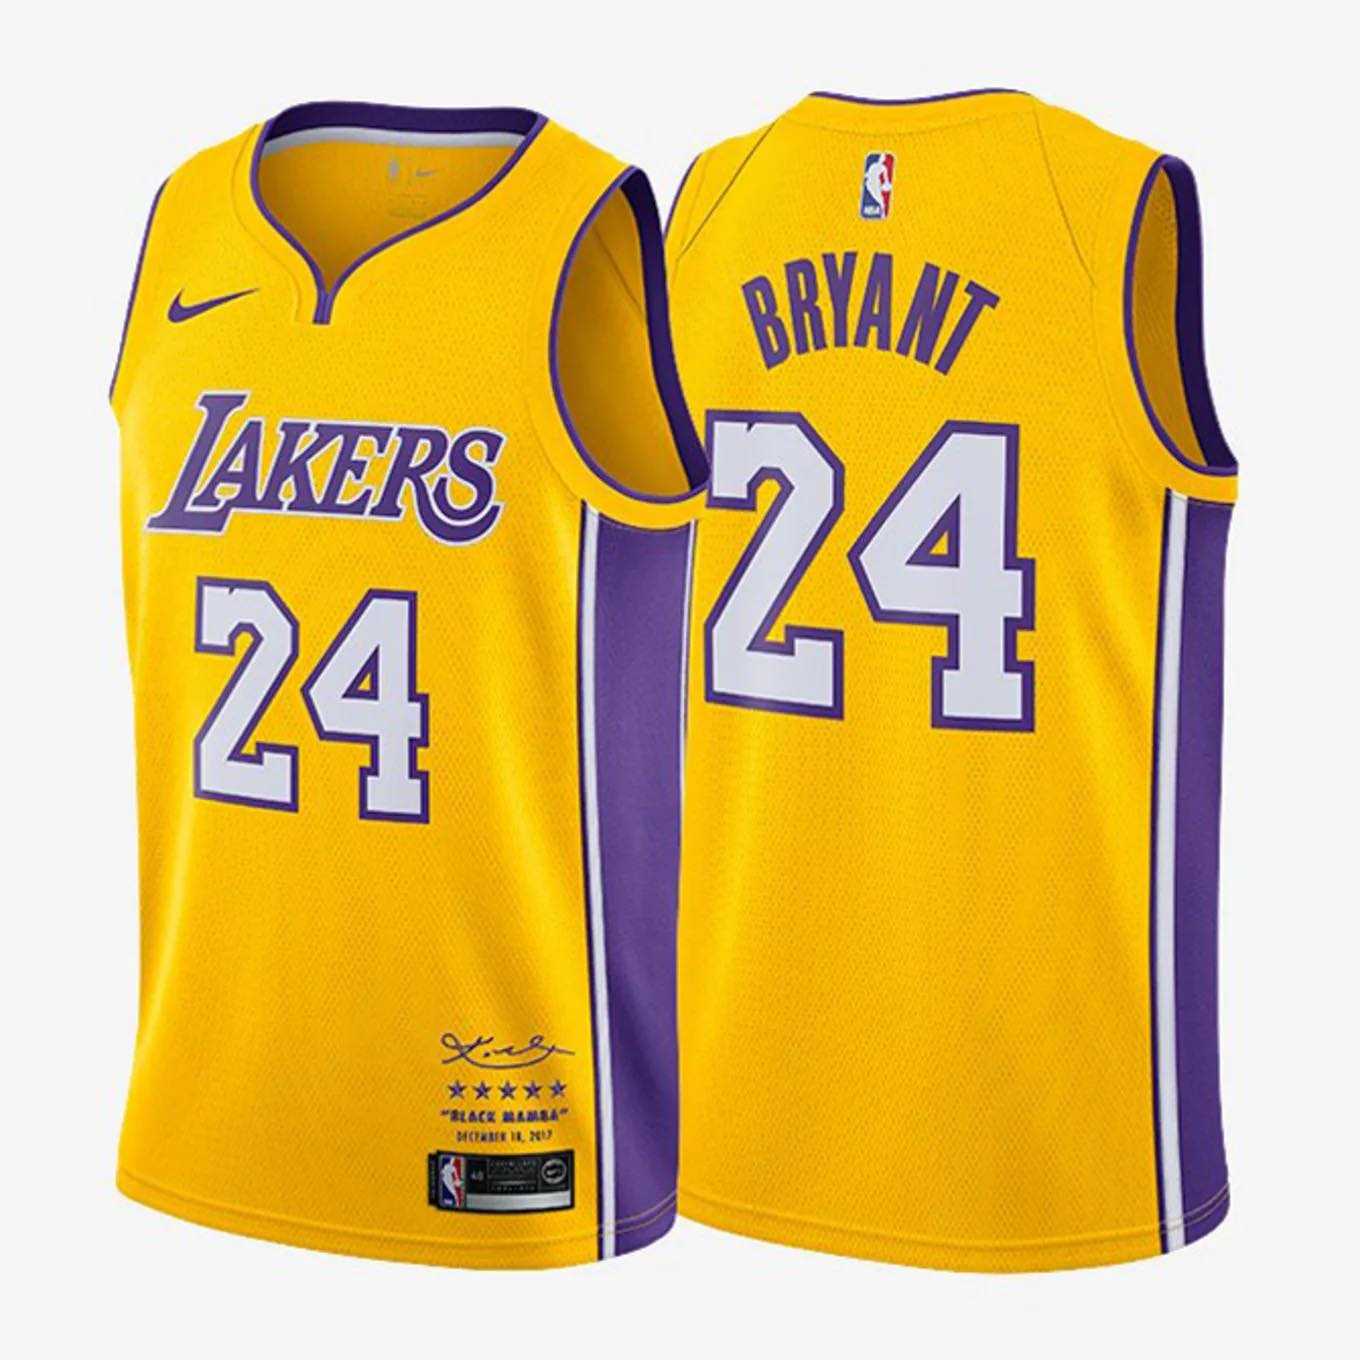 Lakers Yellow Jersey on Sale | bellvalefarms.com